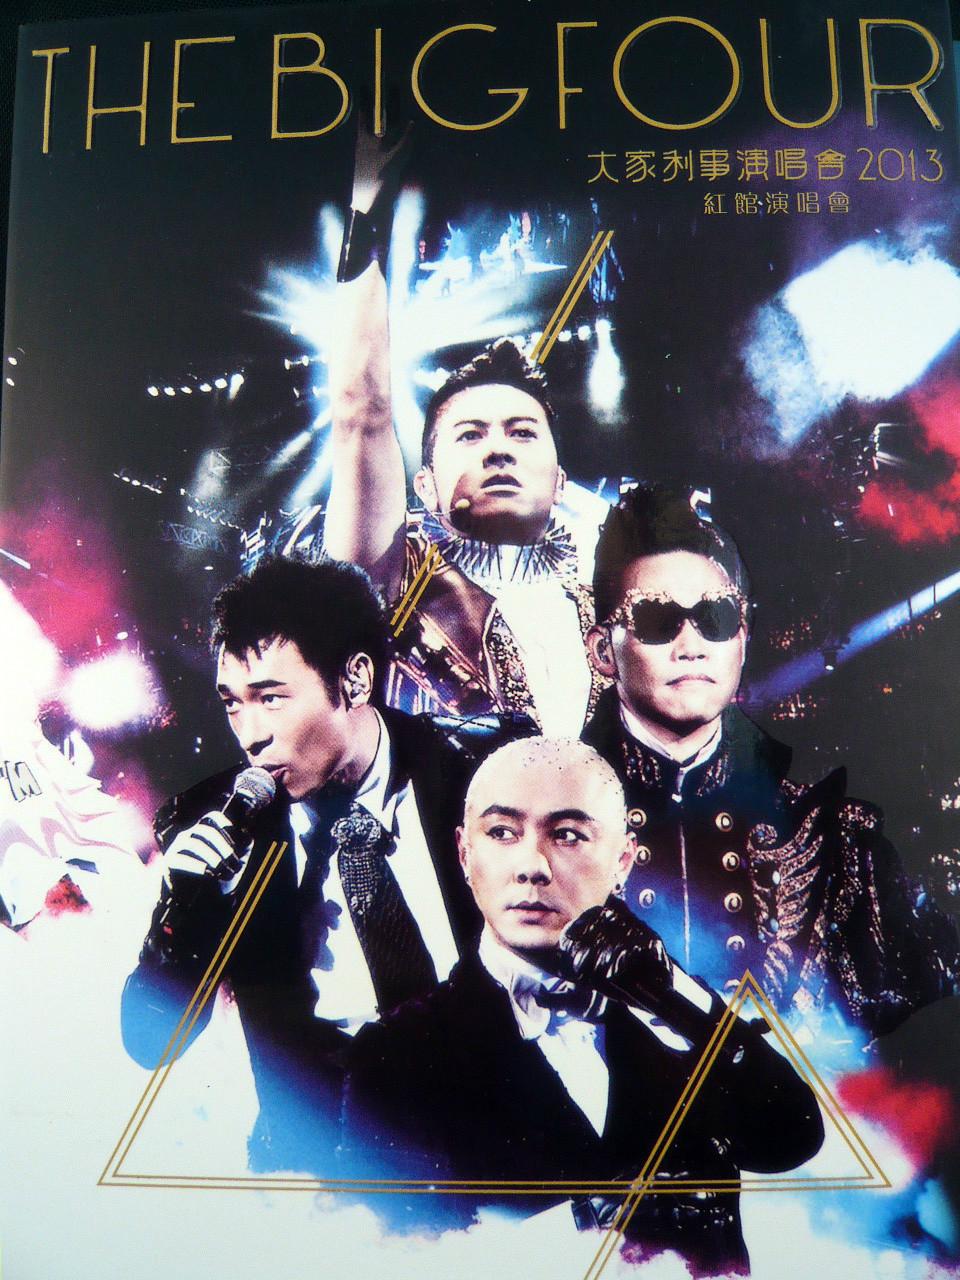 [The Big Four大家利事世界巡迴演唱會2013]The Big Four World Tour 2013 Blu-ray 1080i AVC DTS-HD MA 6 1[43.19GB]-2.jpg